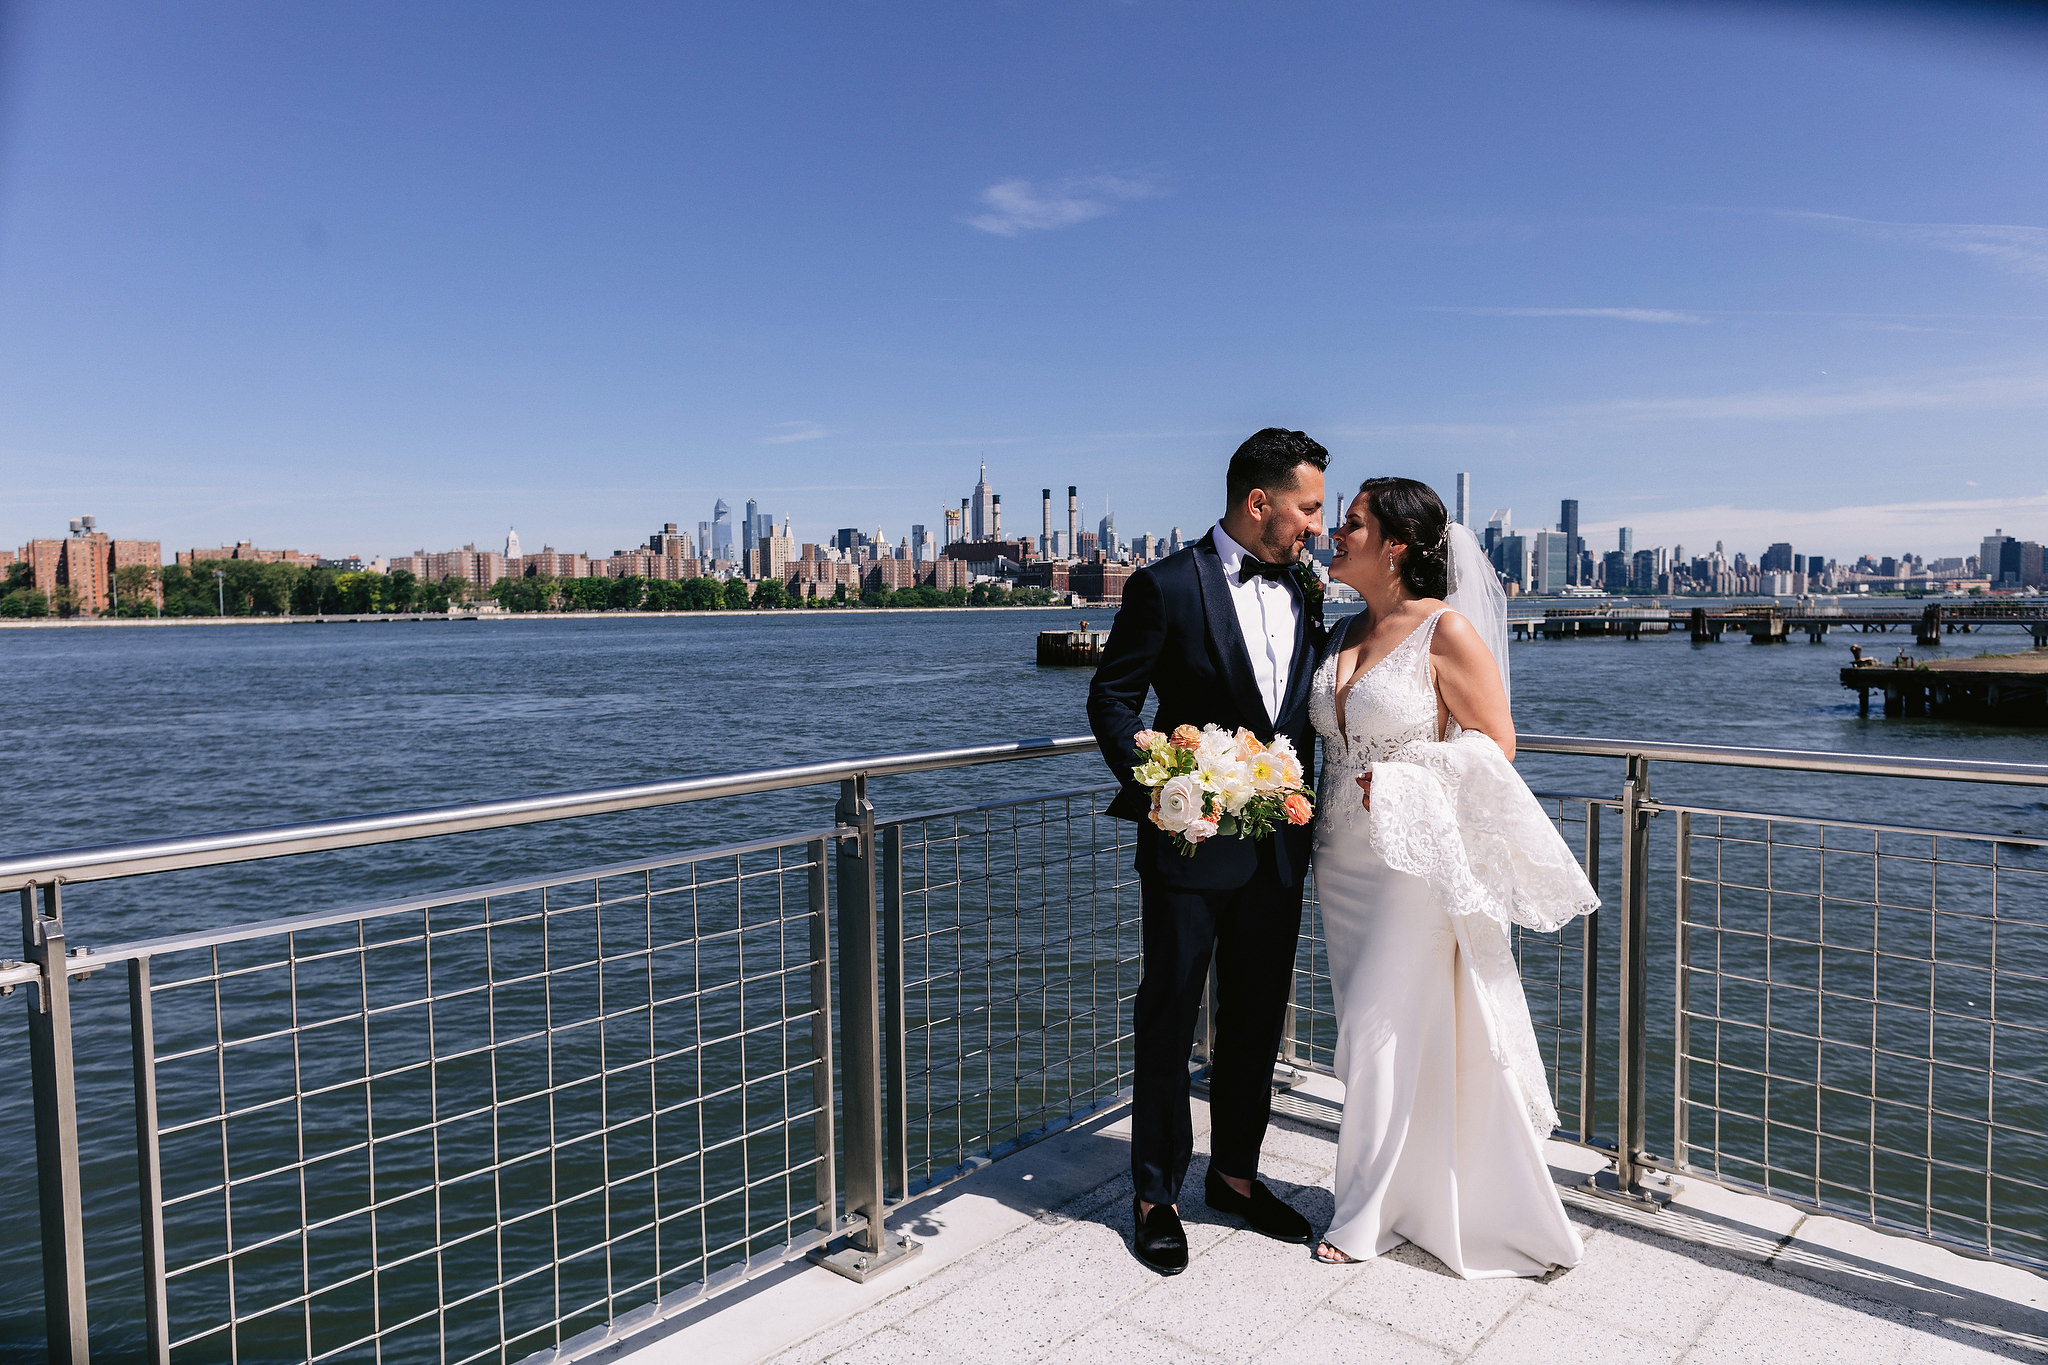 postponed wedding, new your city skyline